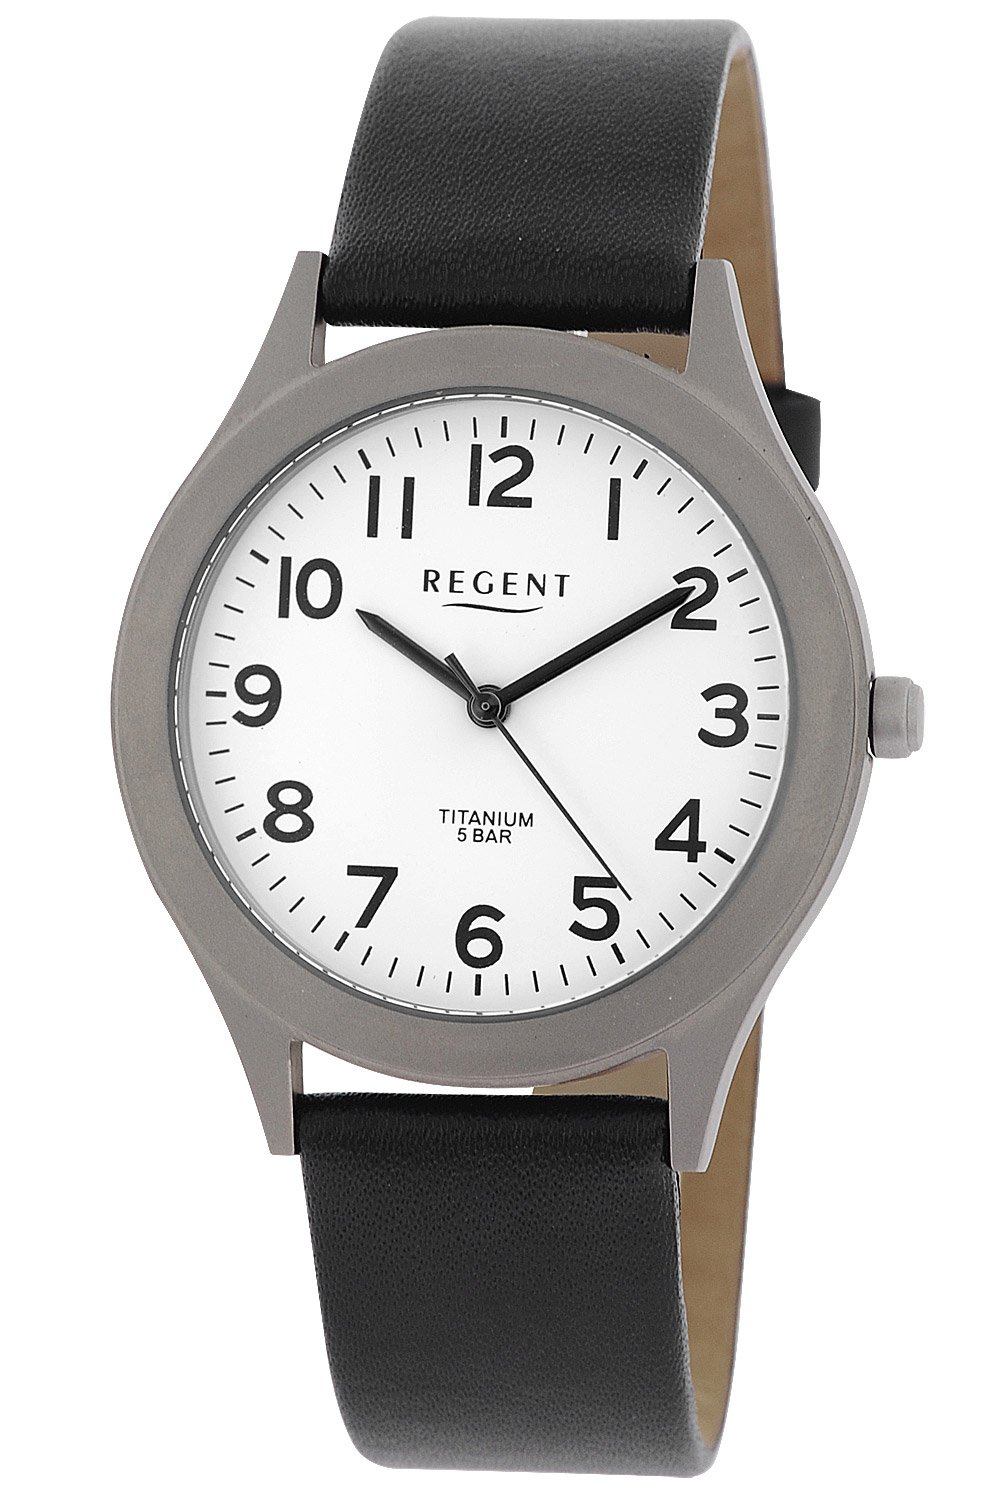 Regent Titanium Men\'s Watch Strap uhrcenter F-842 with Leather •